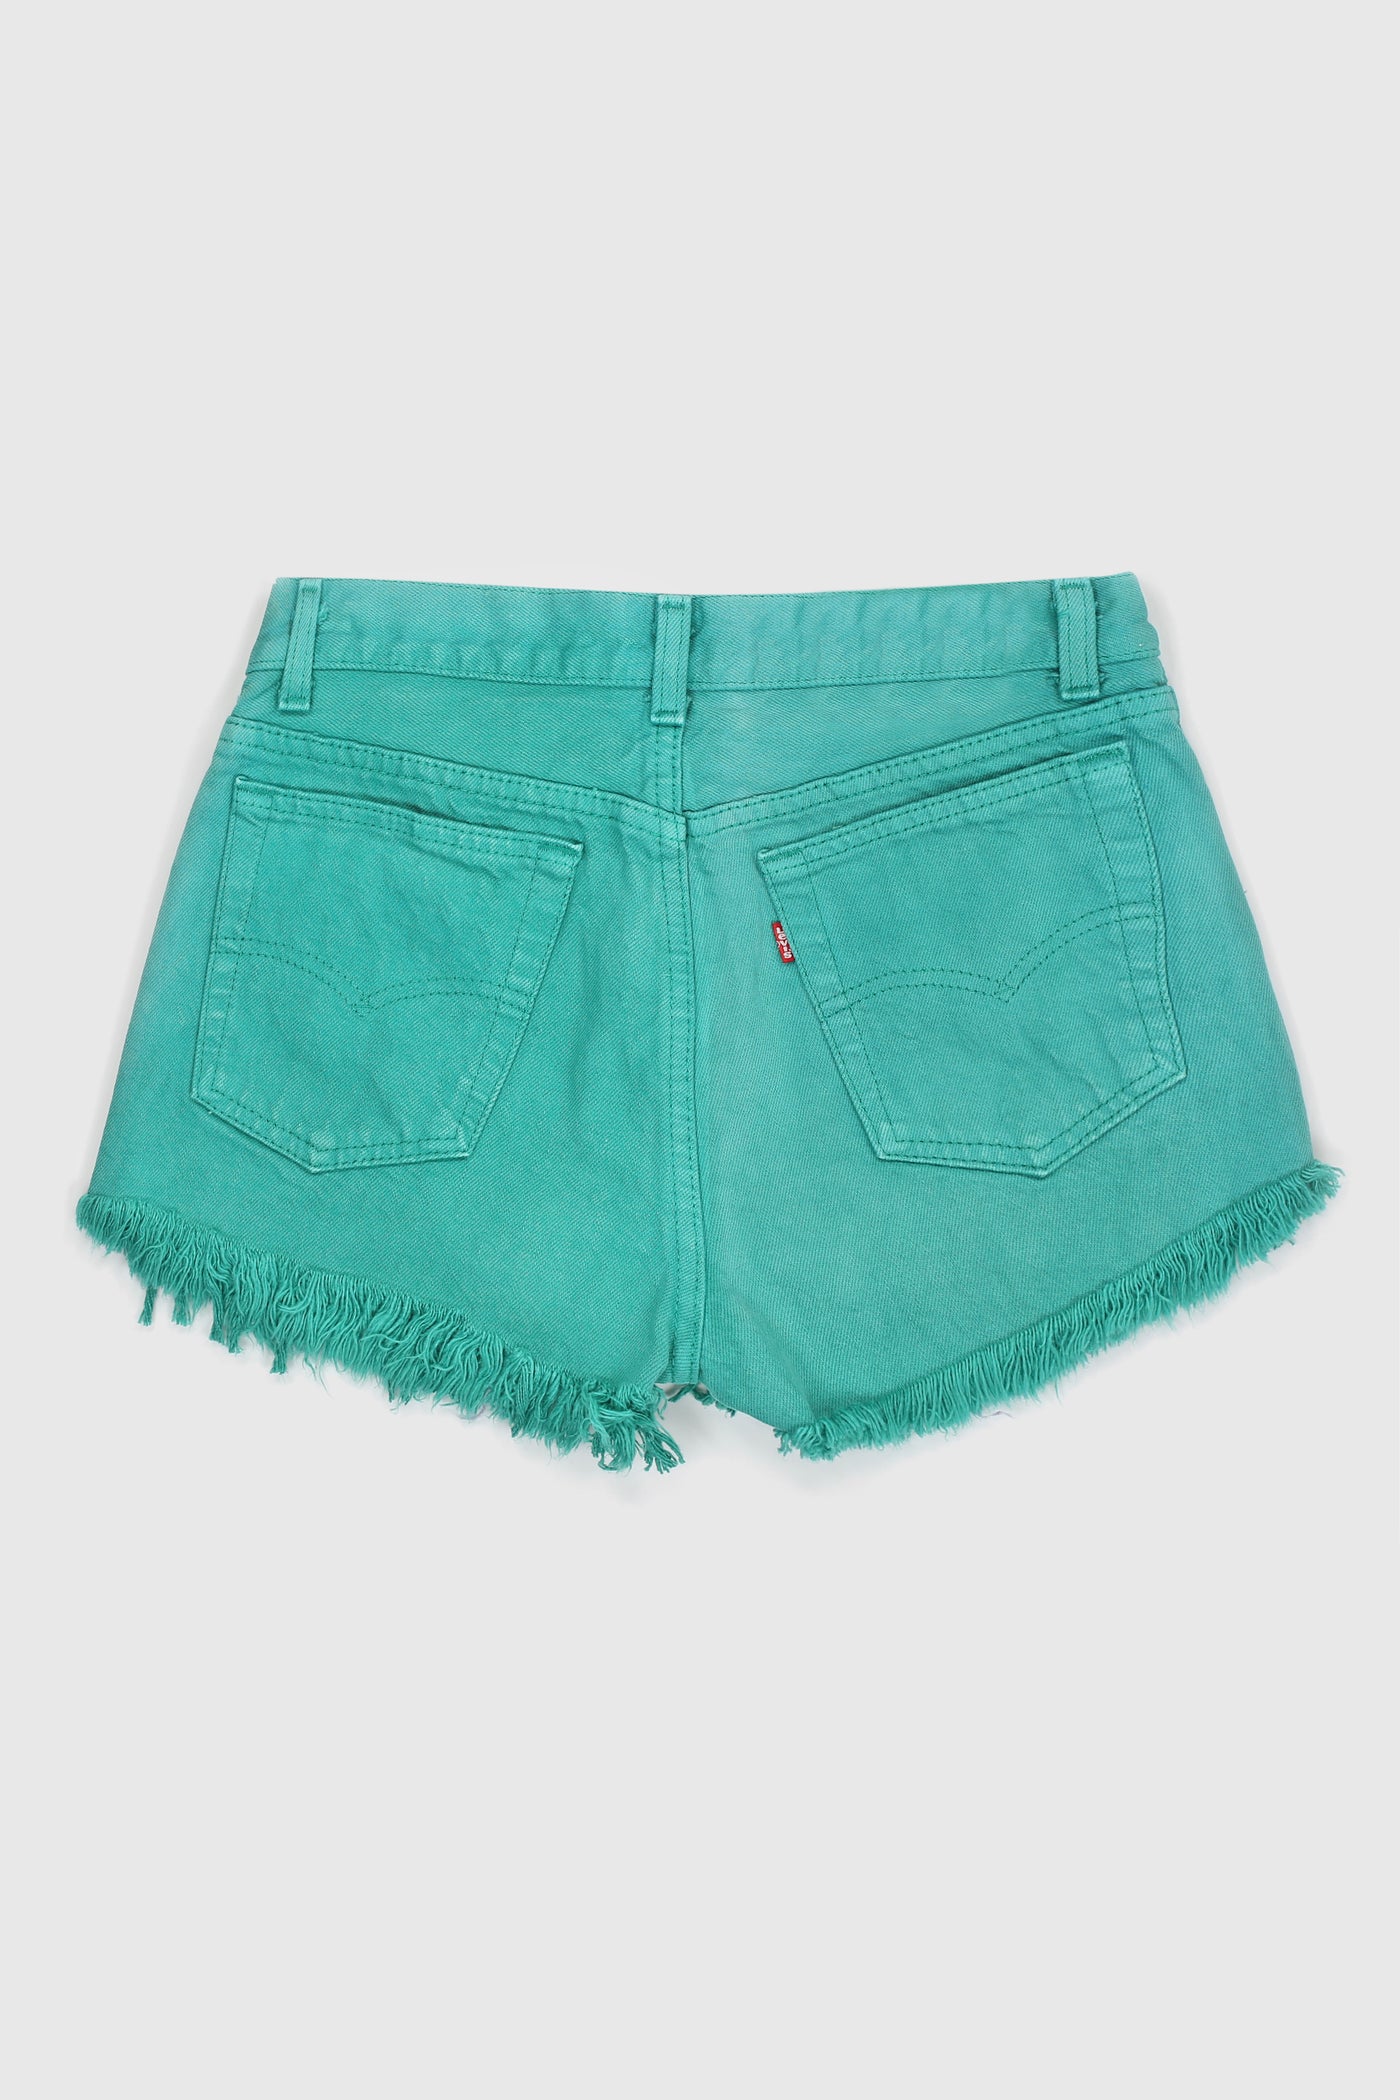 Vintage Levis 701 Mint Green Distressed Shorts